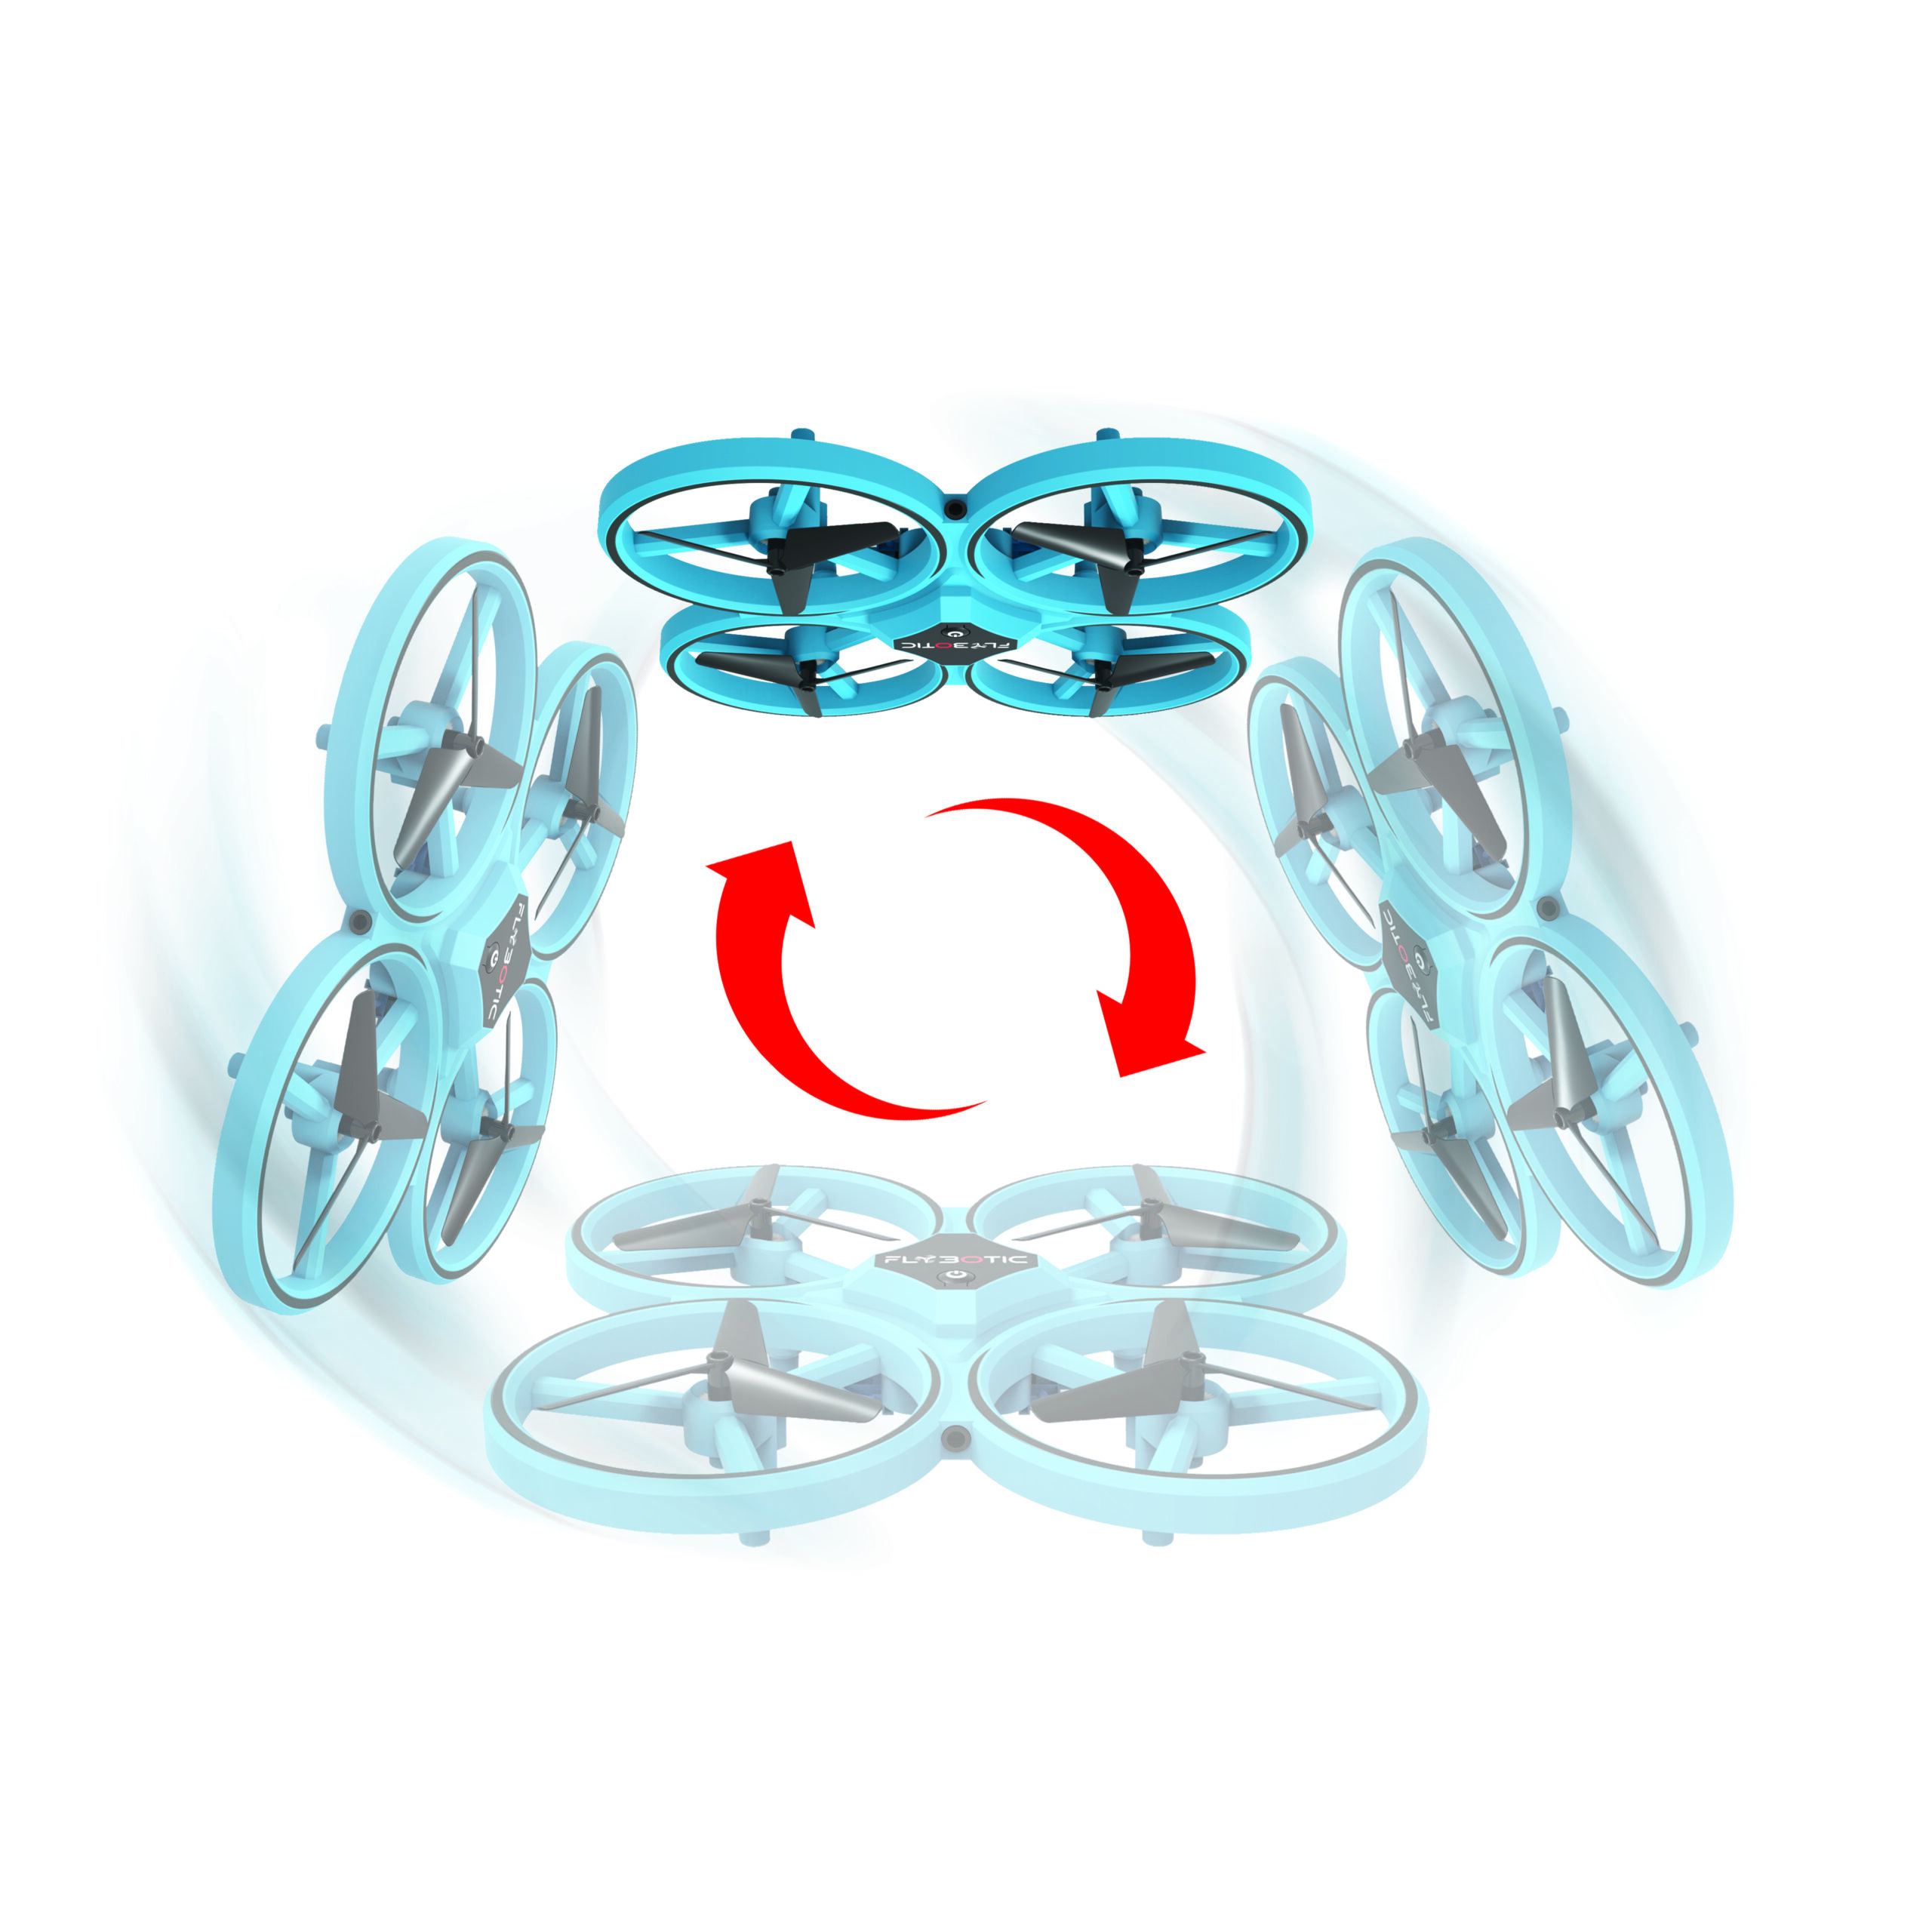 FLYBOTIC – FLASHING DRONE – Silverlit